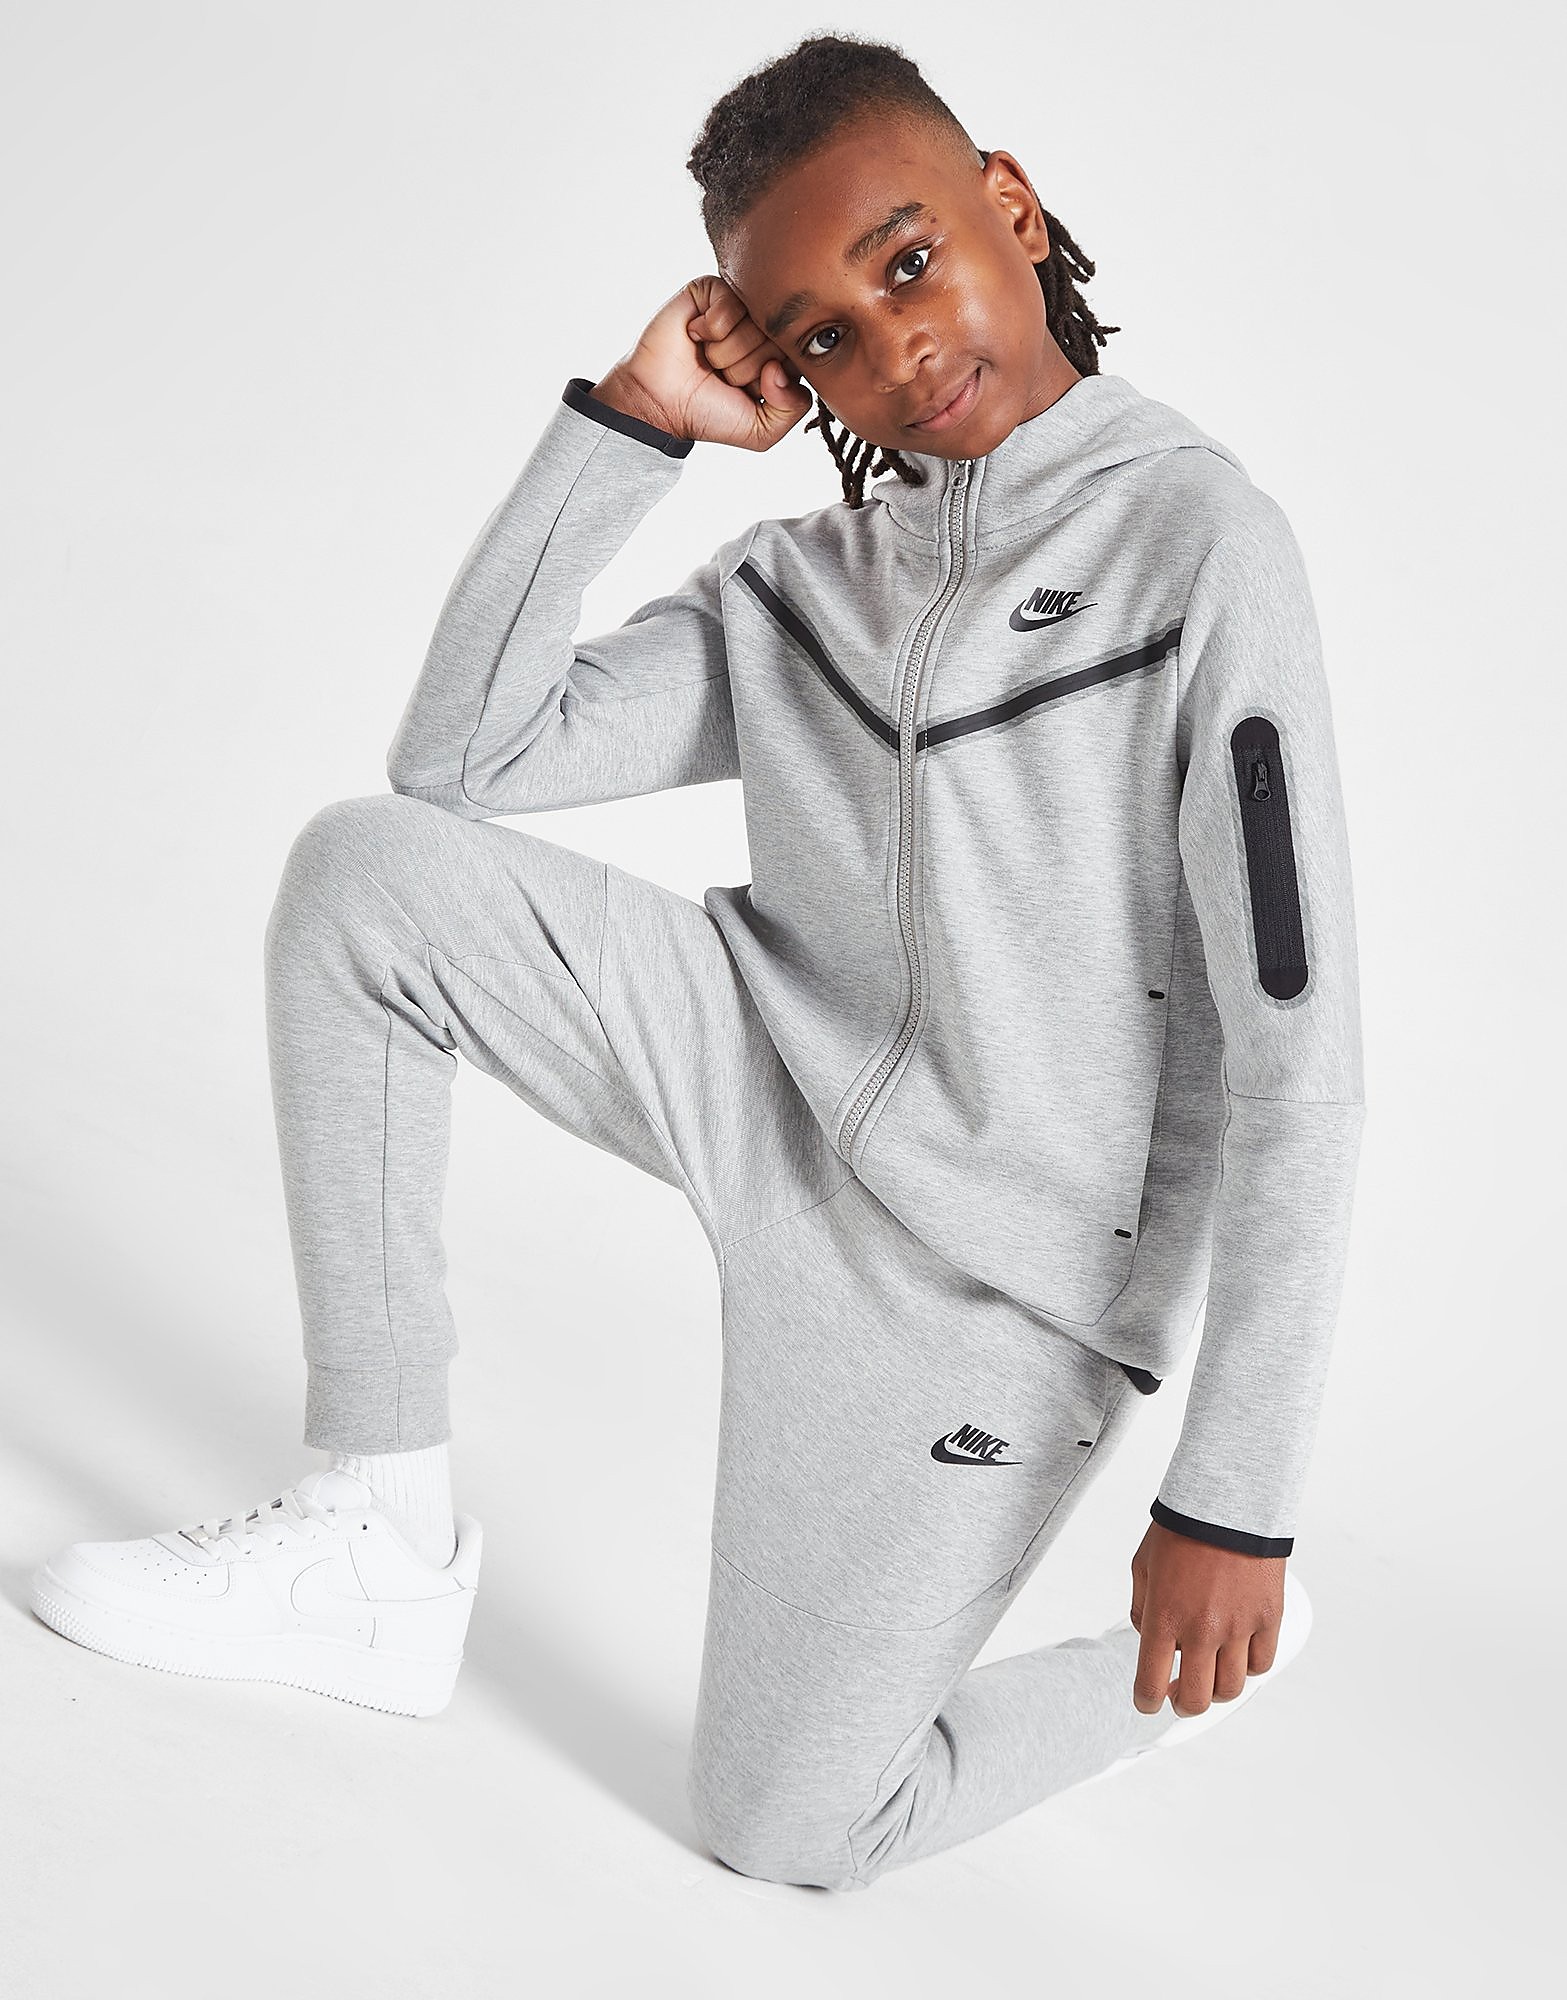 Nike tech fleece -verryttelyhousut juniorit - kids, harmaa, nike